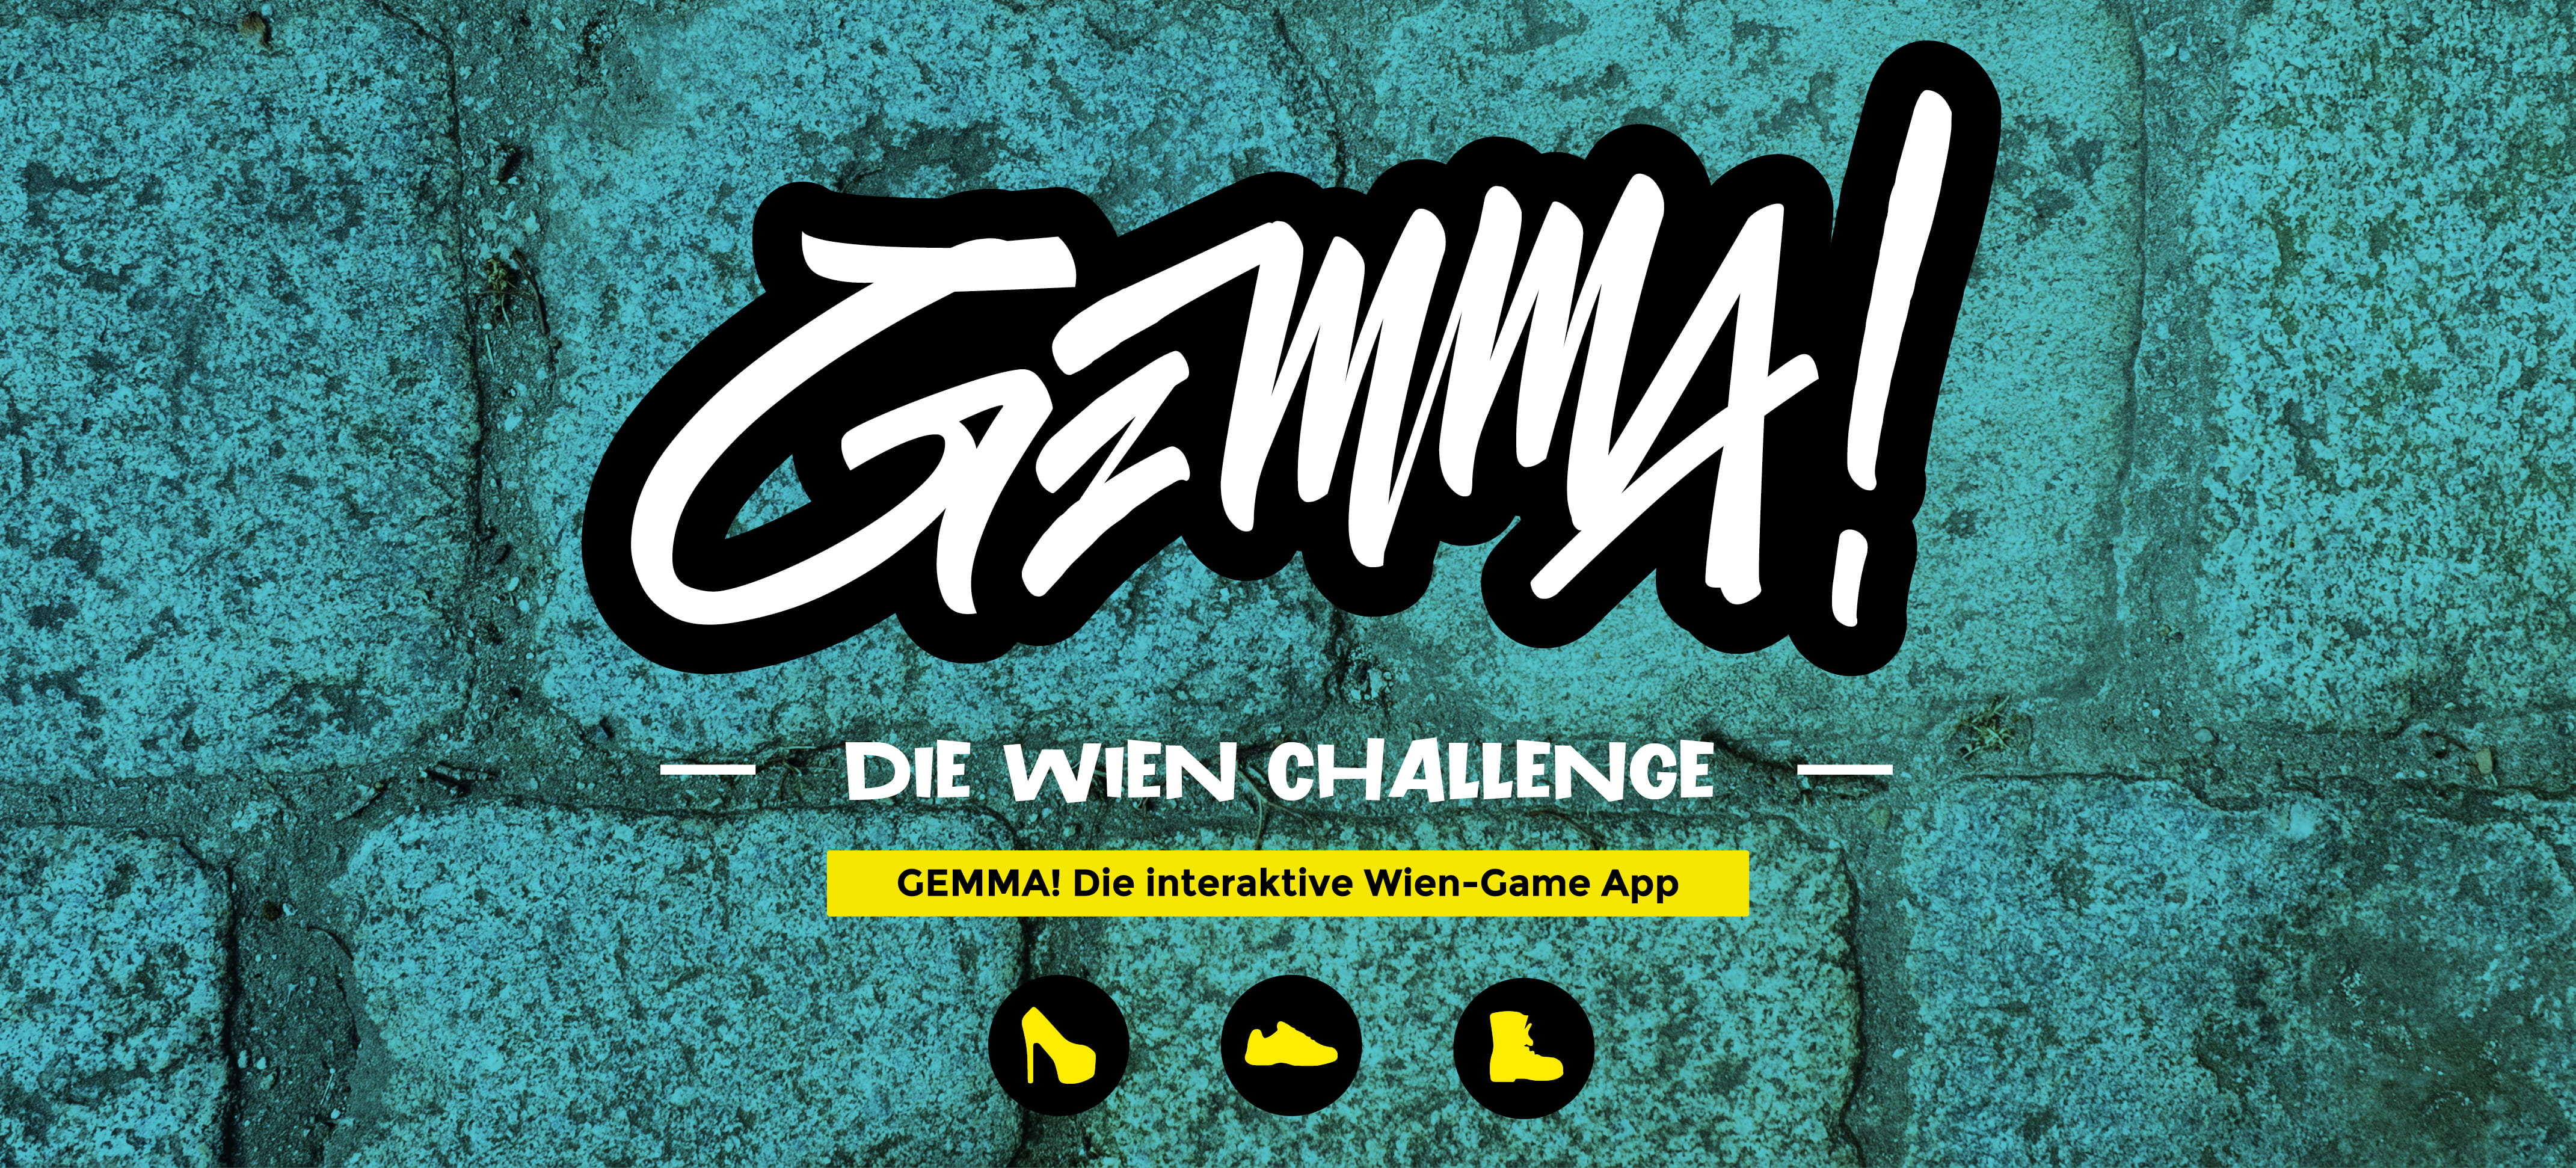 Gemma! Die Wien Challenge - Die interaktive Wien-Game App (c) Daria Tchapanova